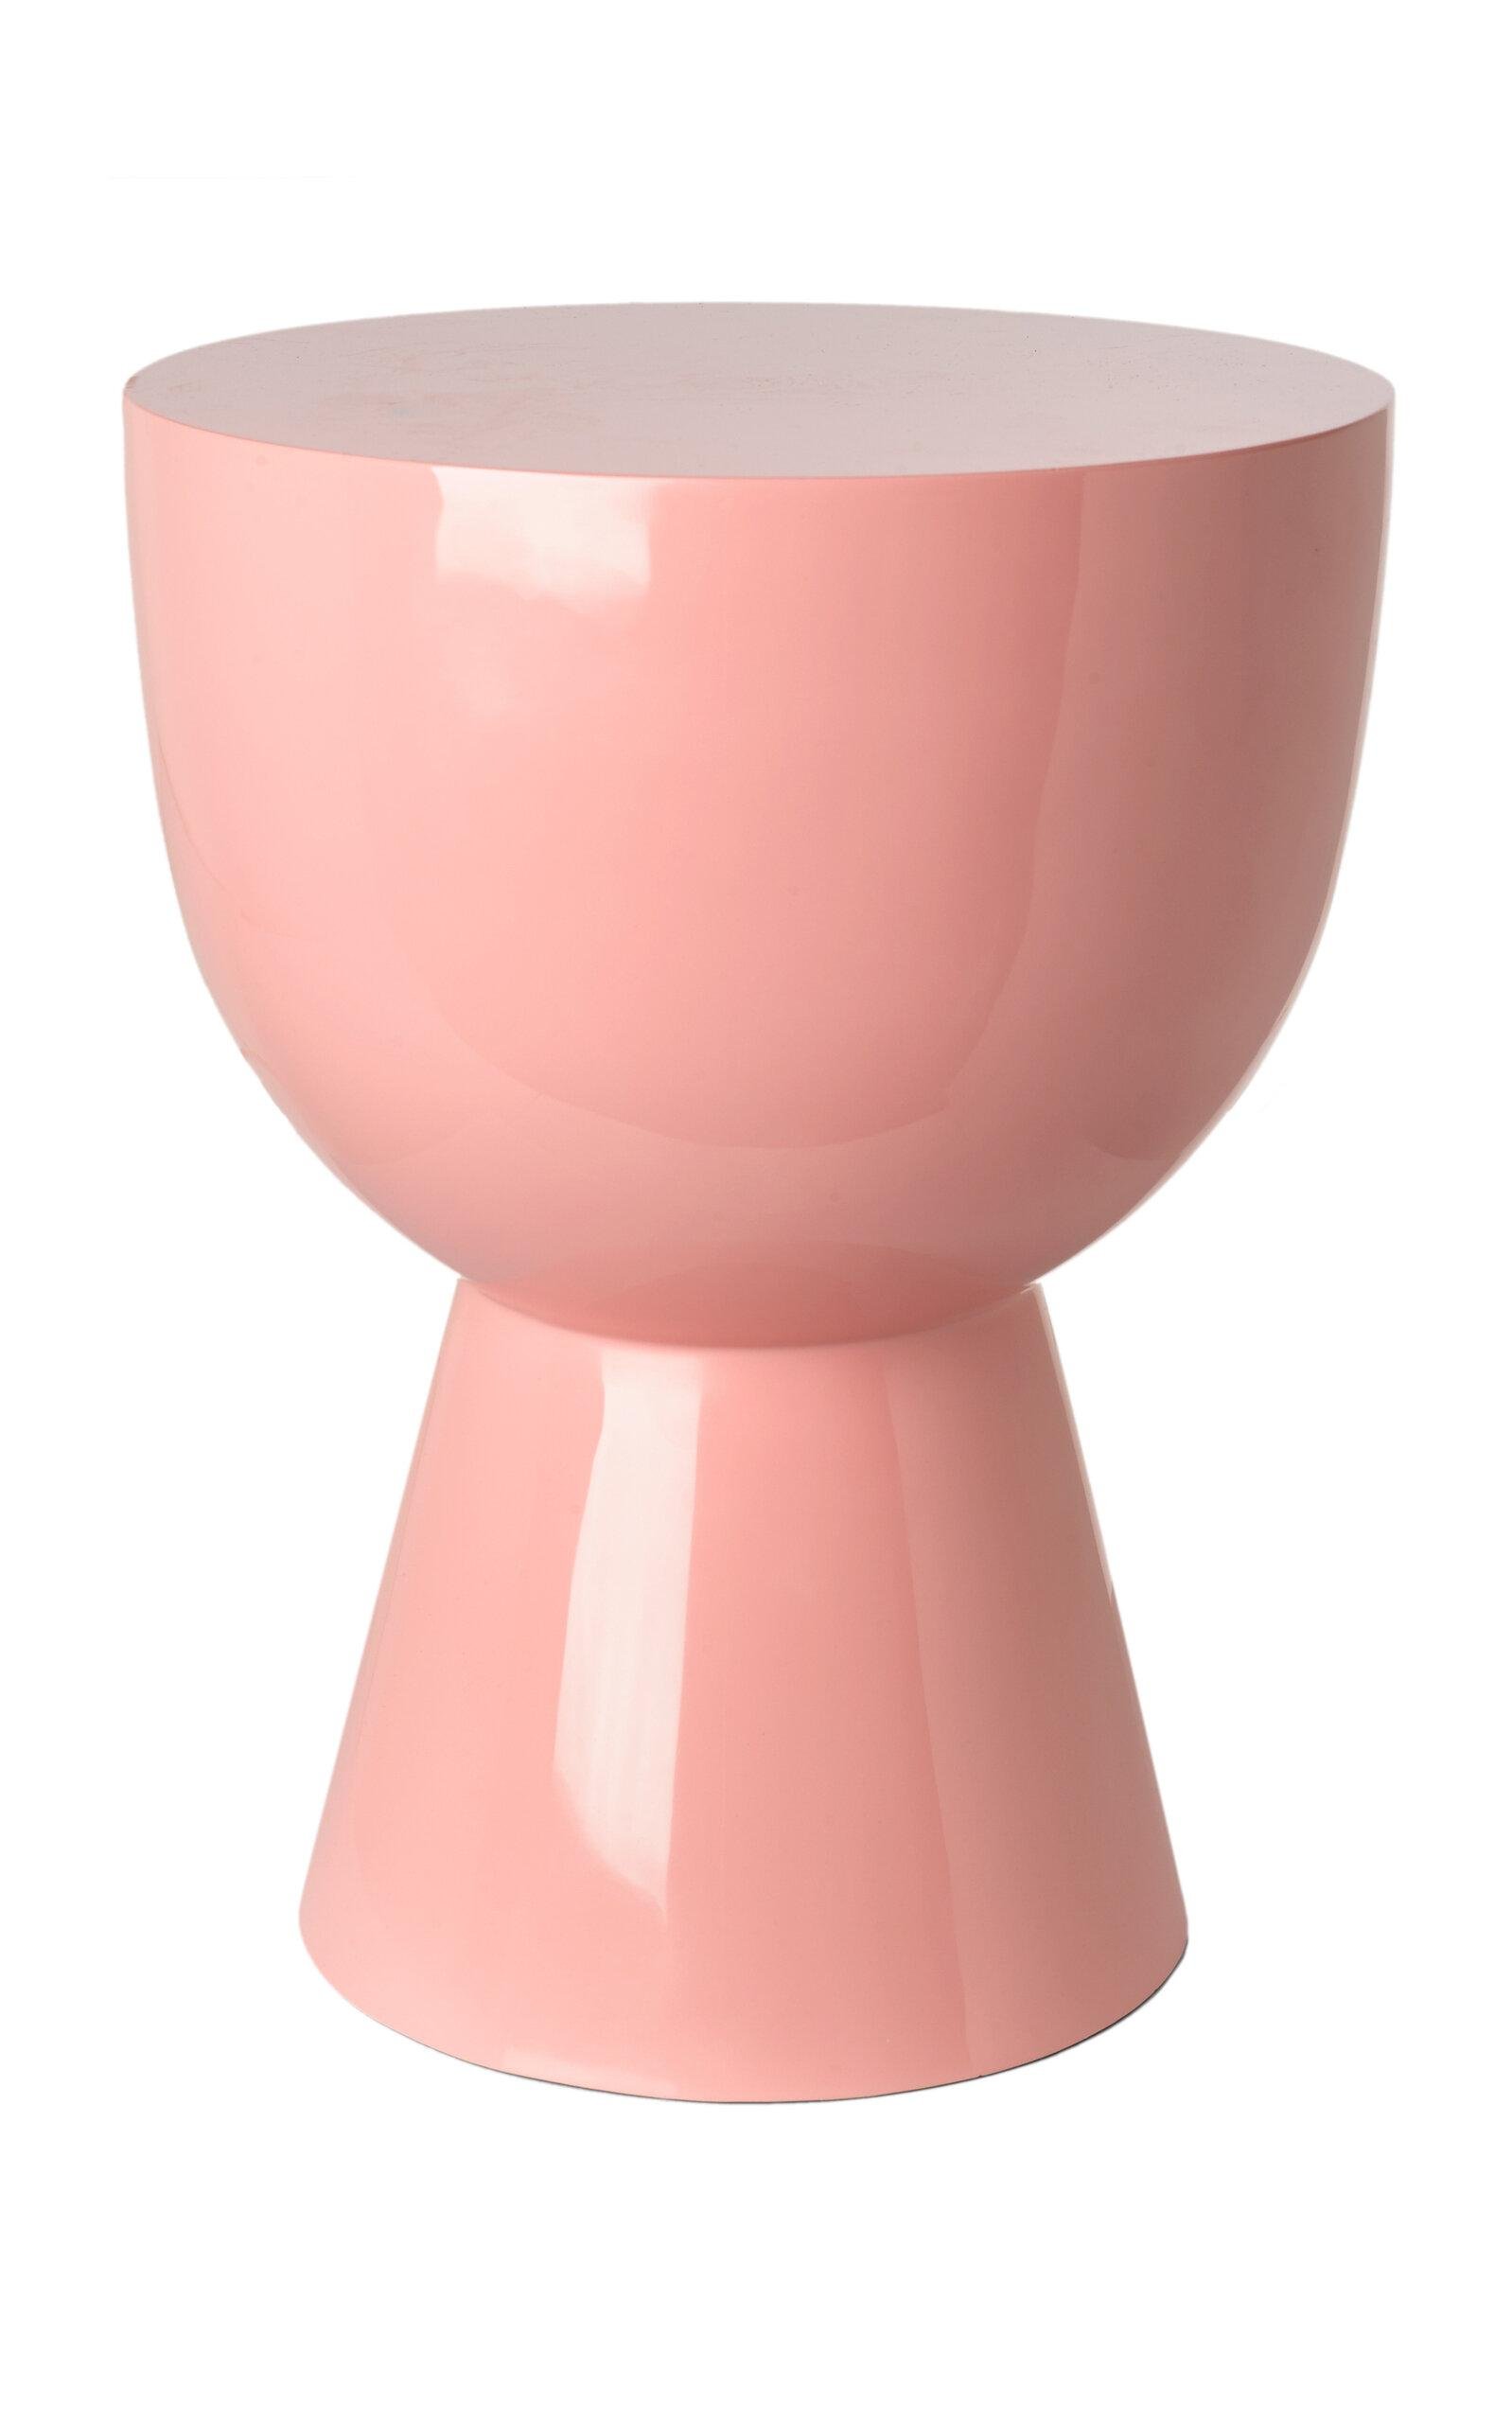 POLSPOTTEN - Tip Tap Stool - Light Pink - Moda Operandi by POLSPOTTEN